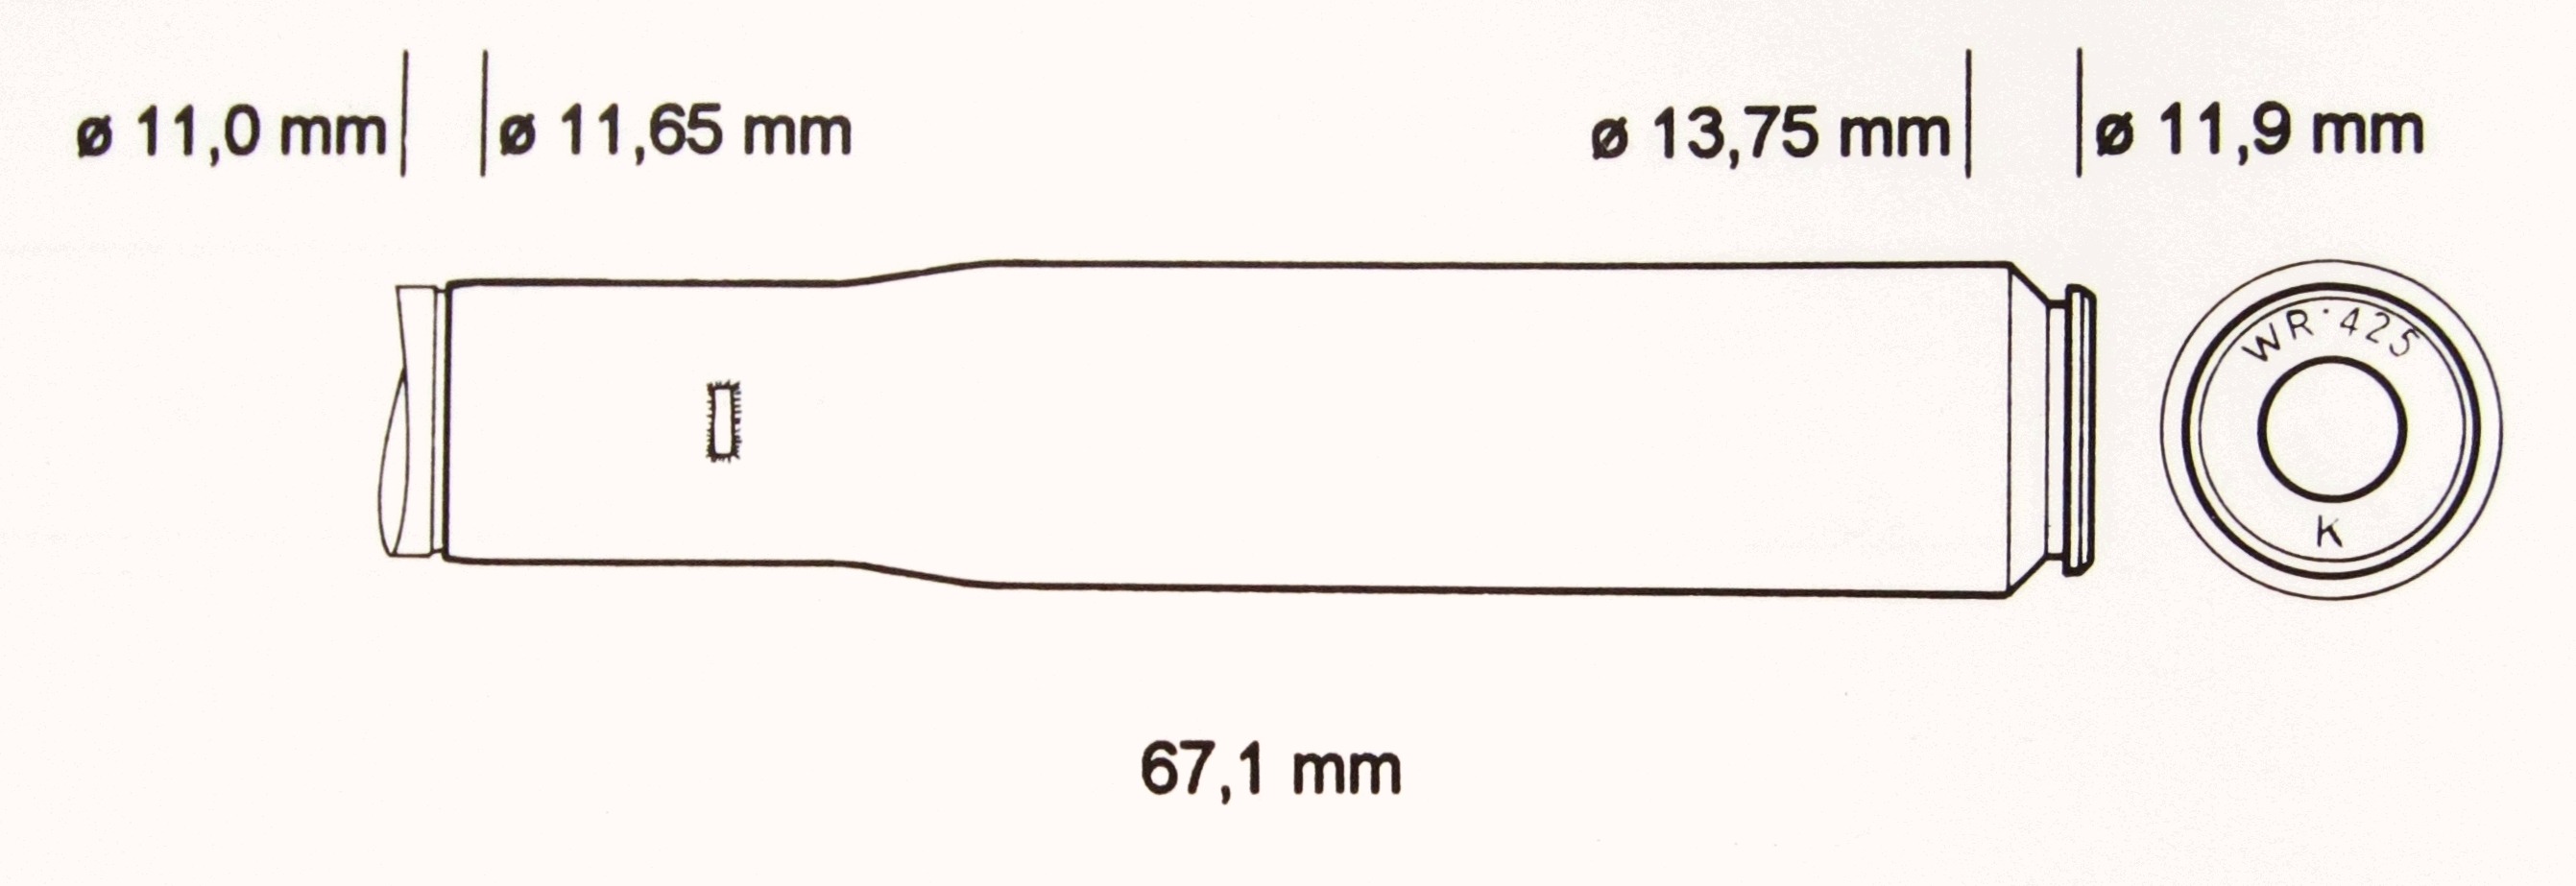 Westley Richards Magnum Express dimension diagram